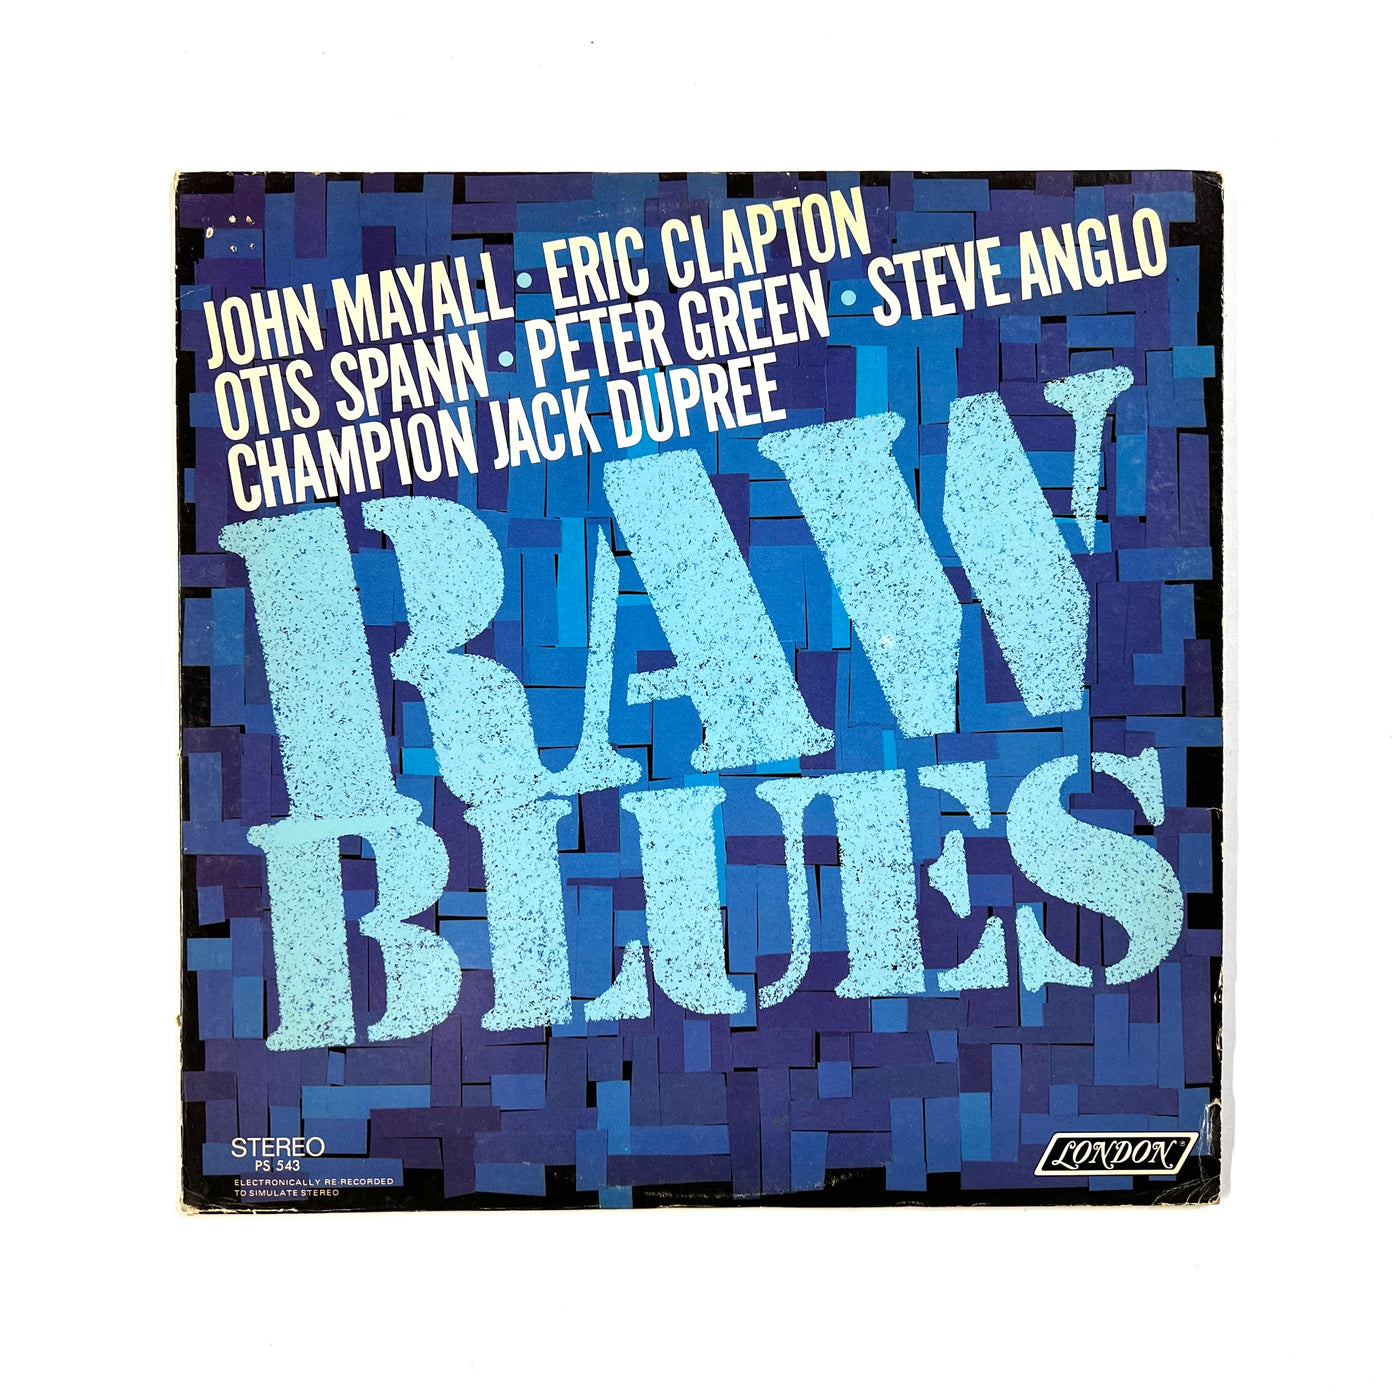 Various - Raw Blues